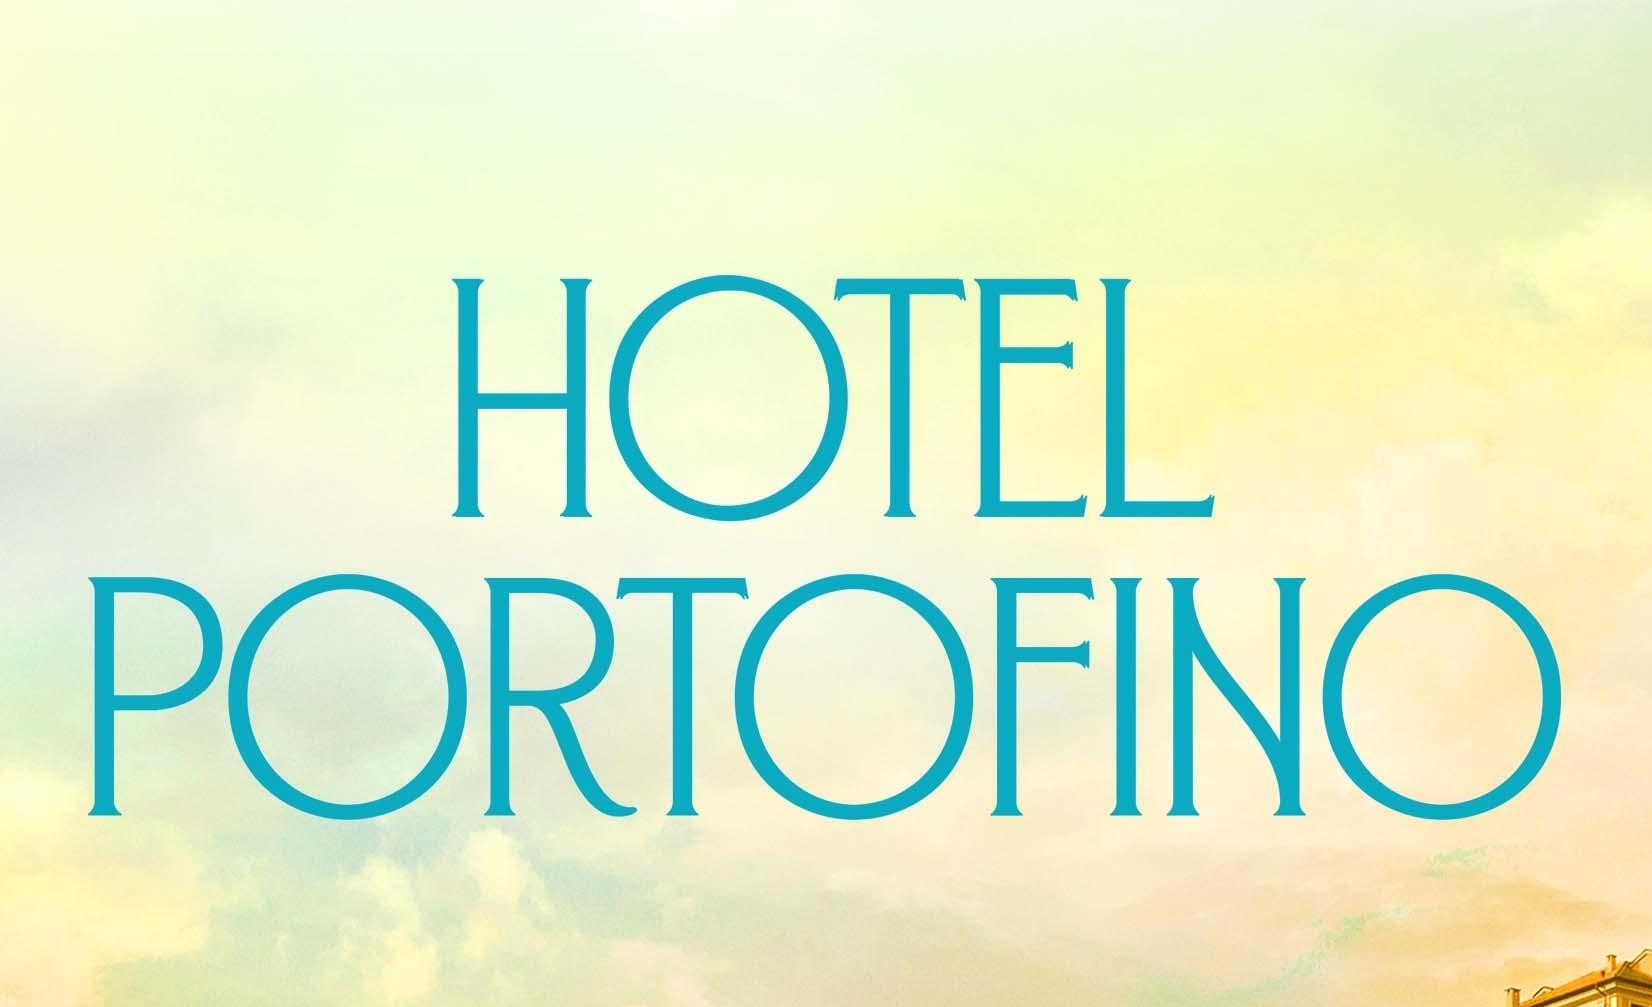 Hotel Portofino seizoen 2 vanaf 1 september op NPO 2